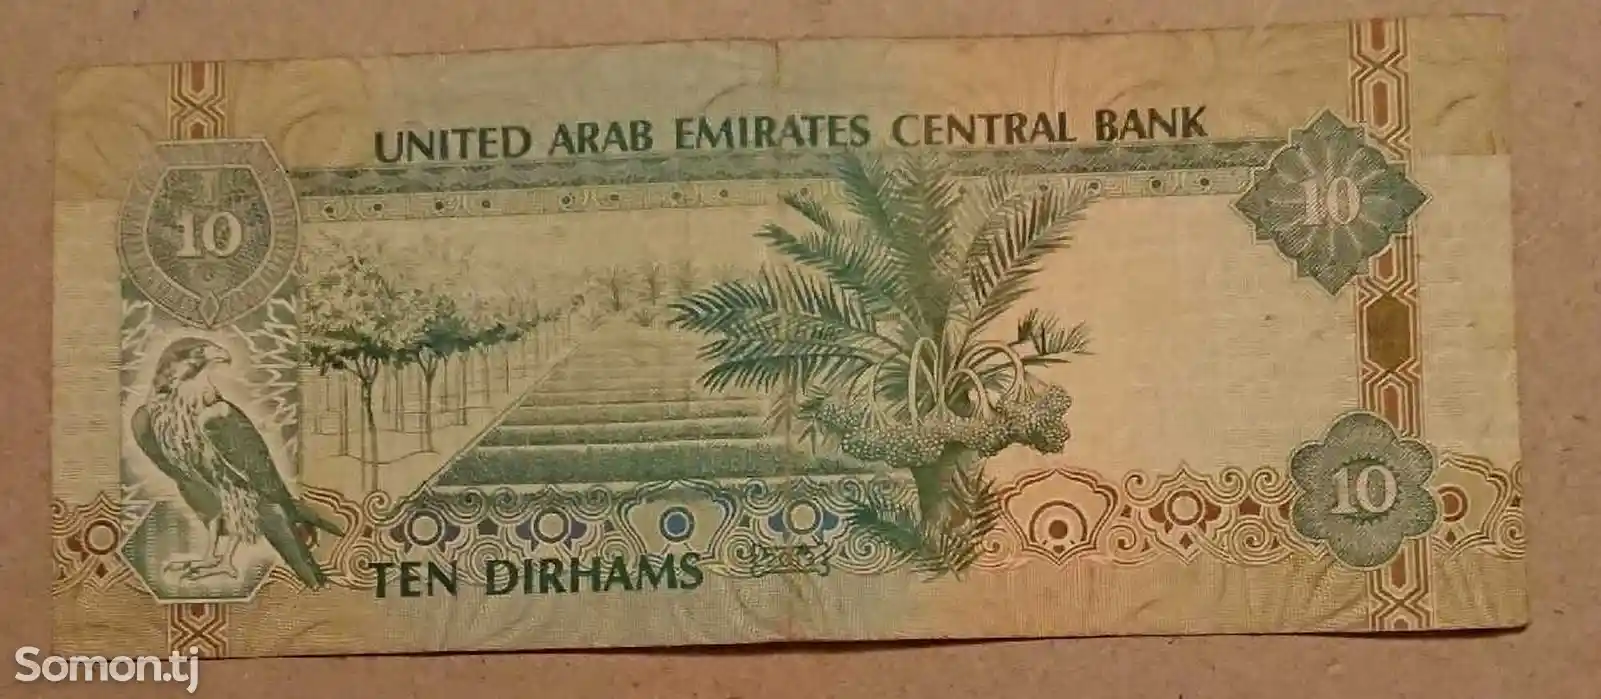 Банкнота ОАЭ-2